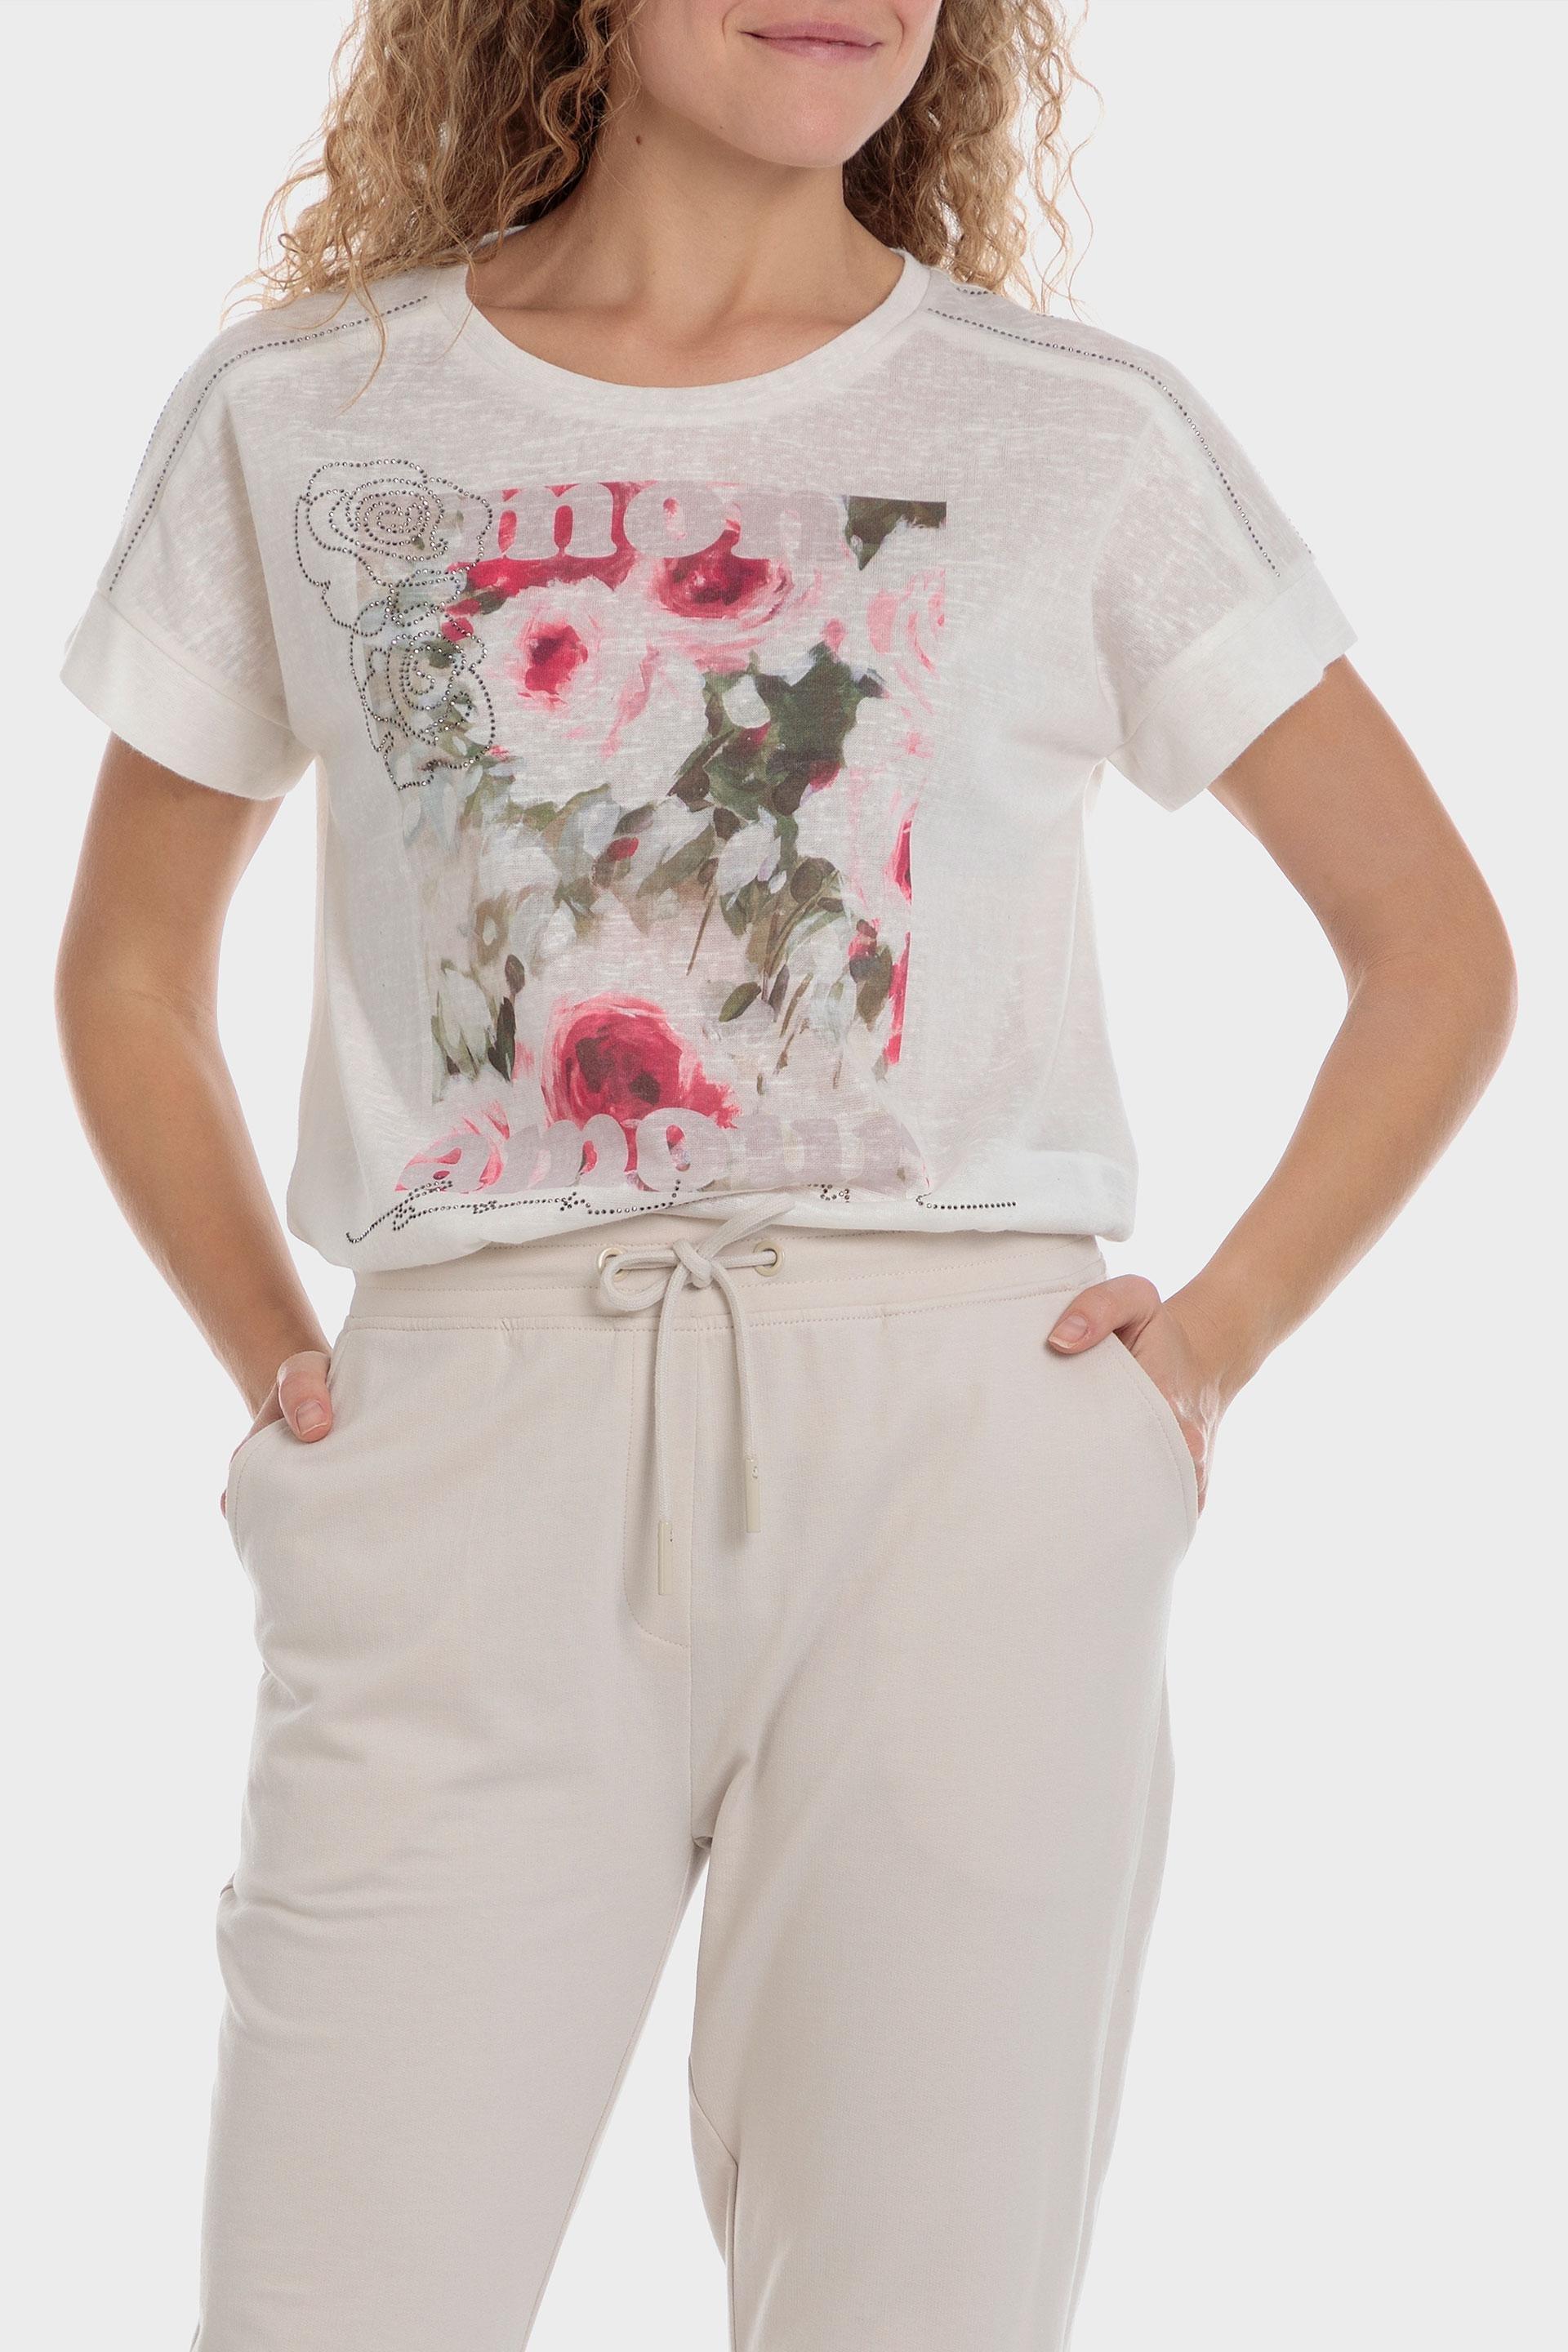 Punt Roma - White Floral Print T-Shirt